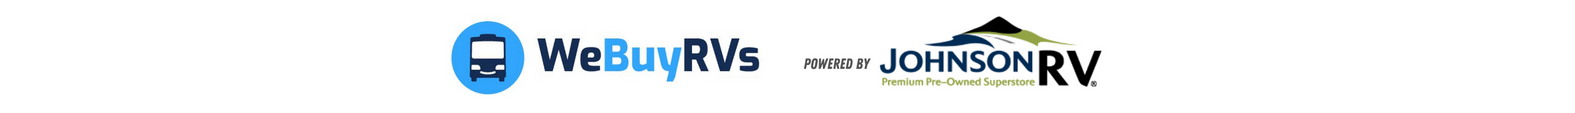 We Buy RVs powered by Johnson RV